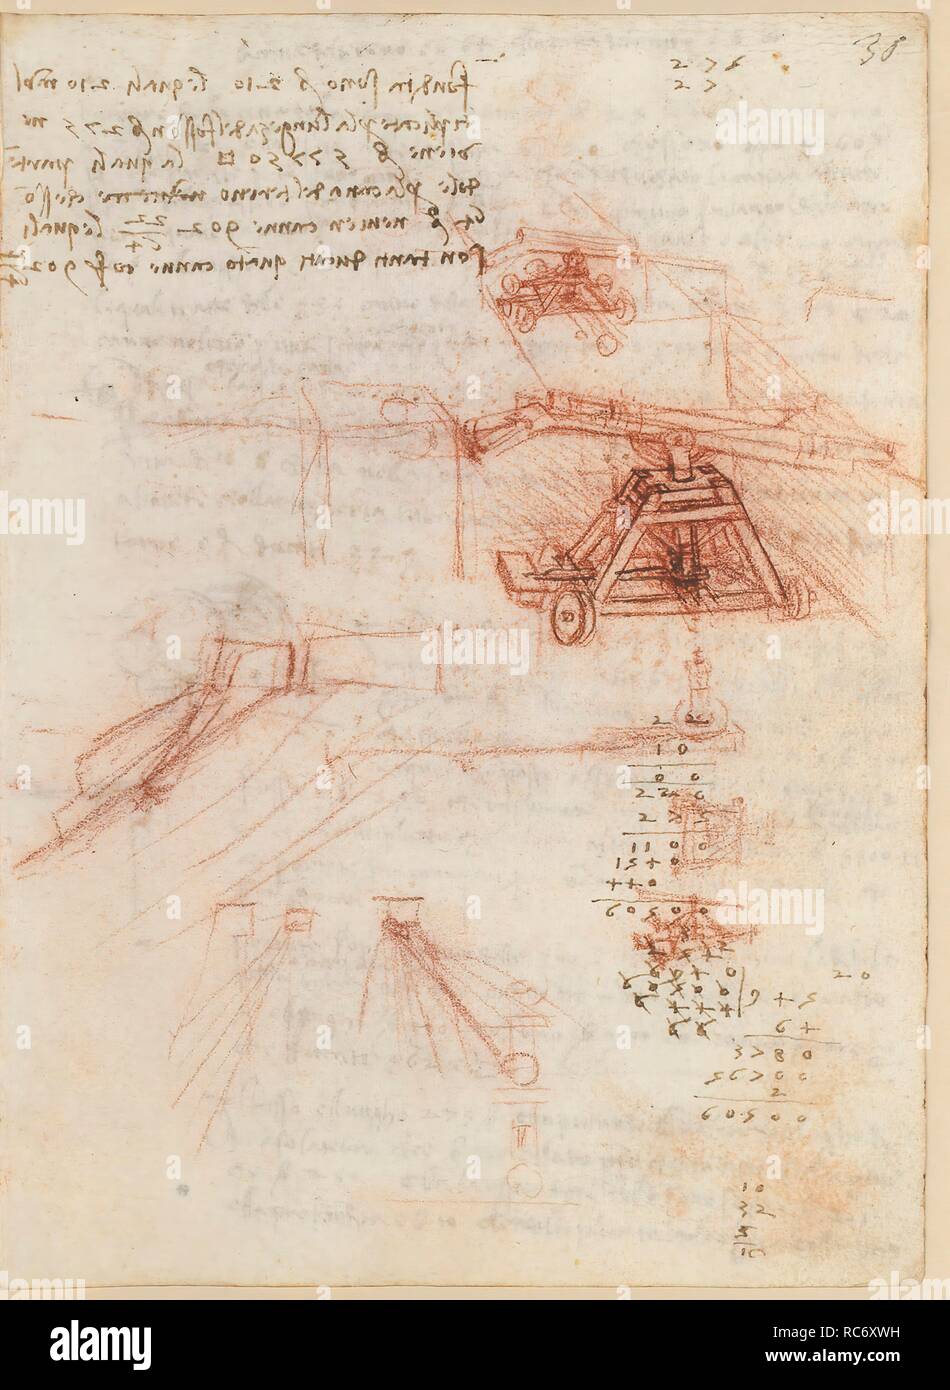 Folio f 36r. Codex Madrid II (Ms. 8936) 'Treaty of fortification, statics and geometry'. 158 folios with 316 pages. Internal format: 210 x 145 mm. MATH OPERATIONS, ACCOUNTING NOTES. CIVIL ENGINEERING, CONSTRUCTION. MILITARY ENGINEERING, FORTIFICATIONS. UNITS OF WEIGHT AND MEASURES. PRINCIPLES OF MECHANICS, CINEMATICS, DYNAMICS. Museum: BIBLIOTECA NACIONAL DE ESPAÑA, MADRID. Author: LEONARDO DA VINCI. Stock Photo